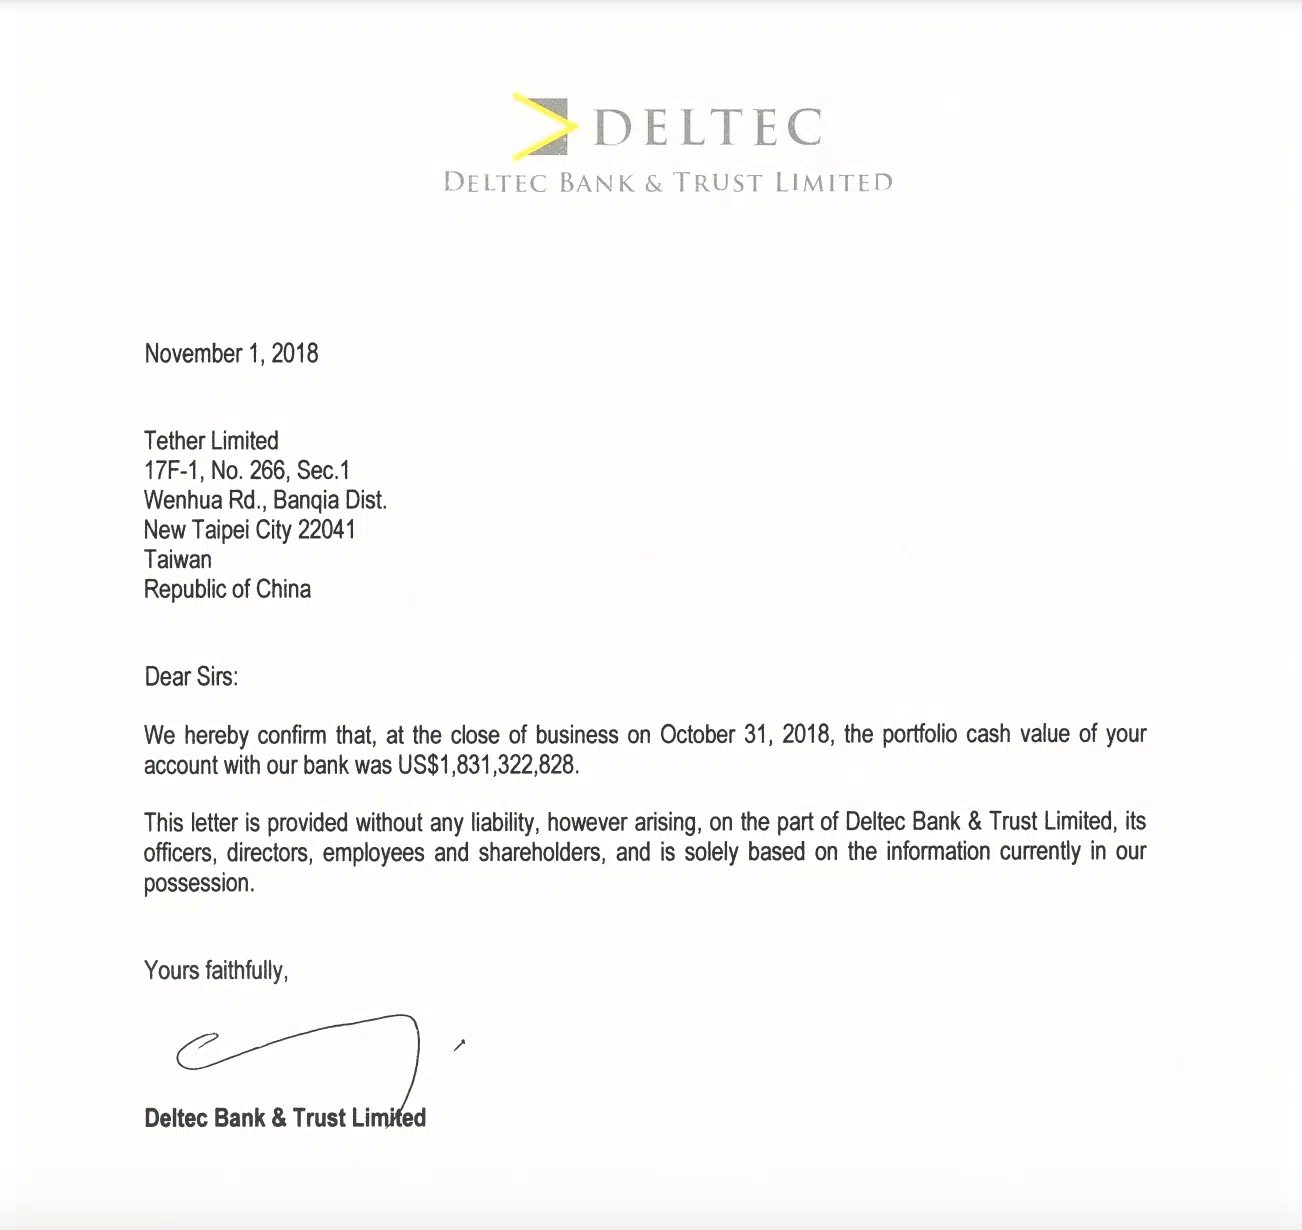 Deltec's letter to Tether confirming its cash portfolio